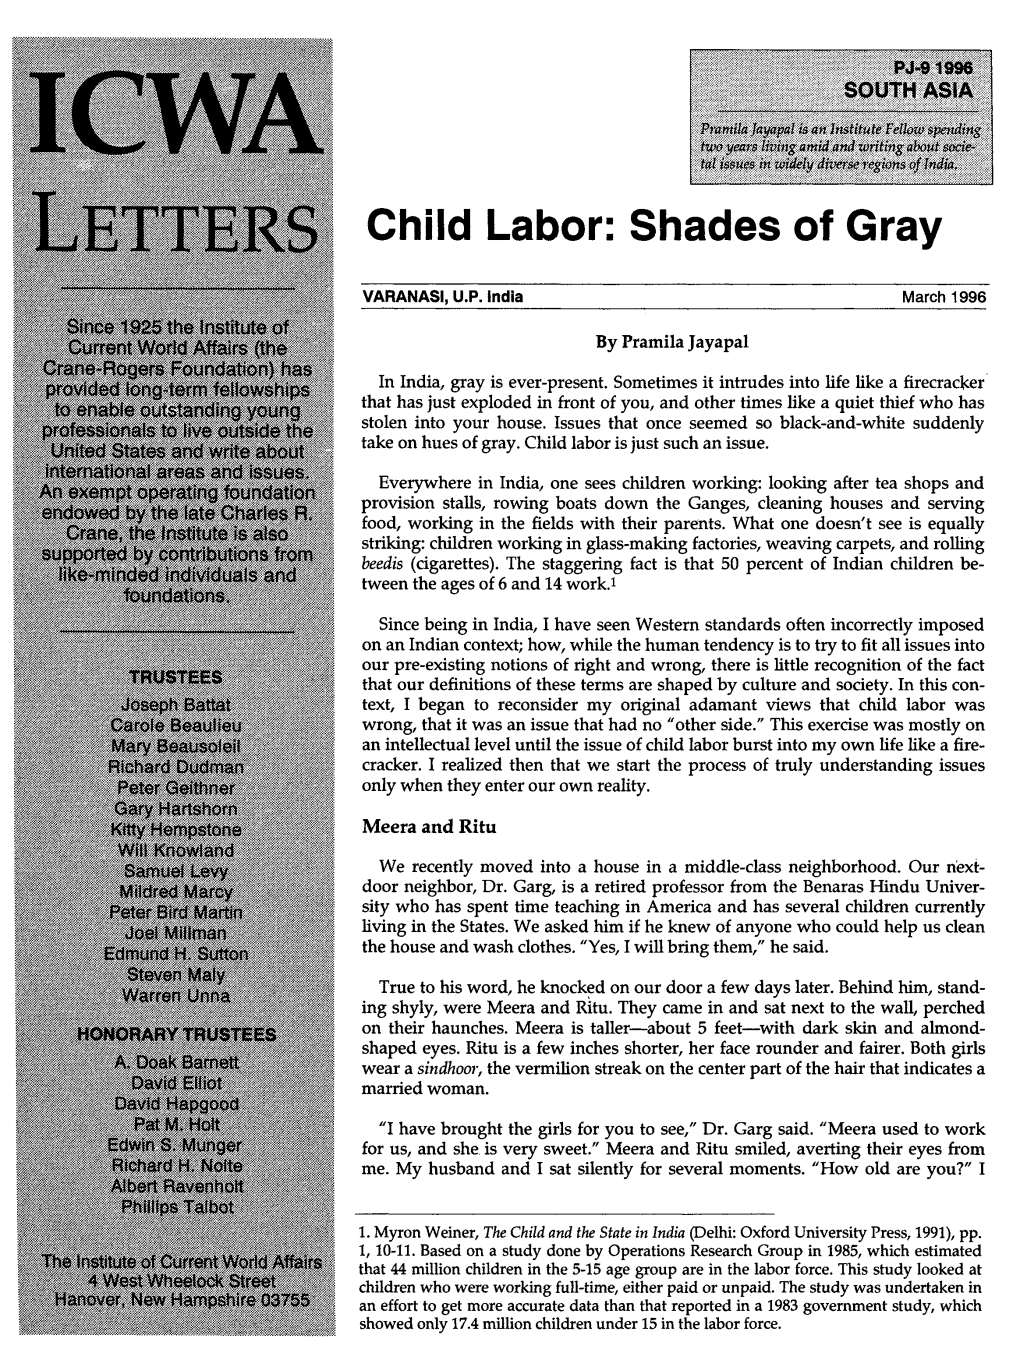 Child Labor: Shades of Gray